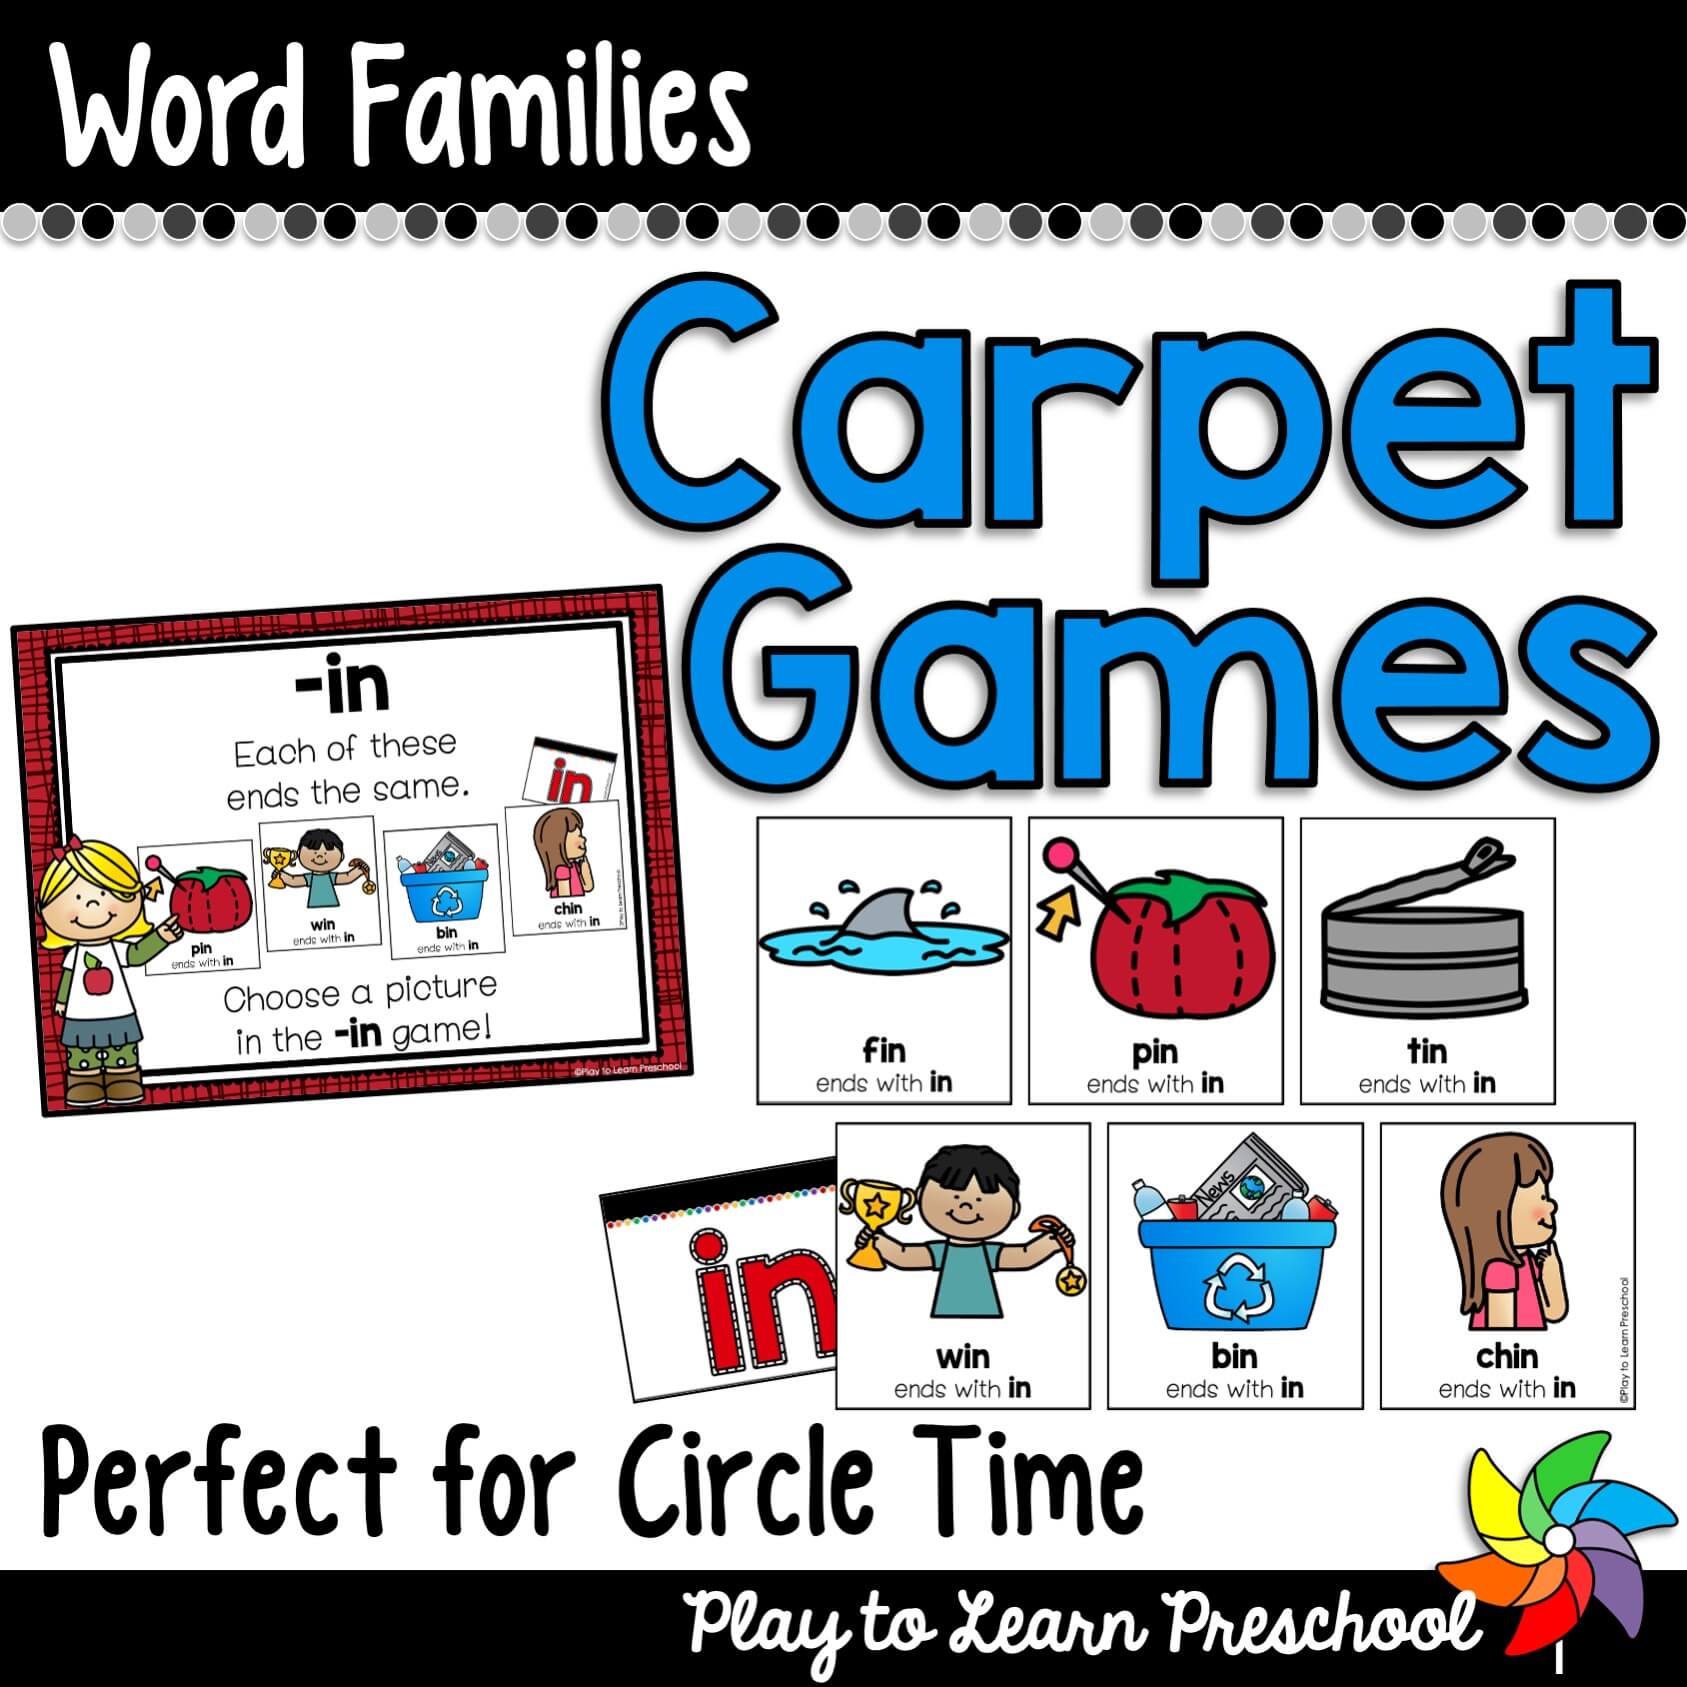 Word Families Carpet Games